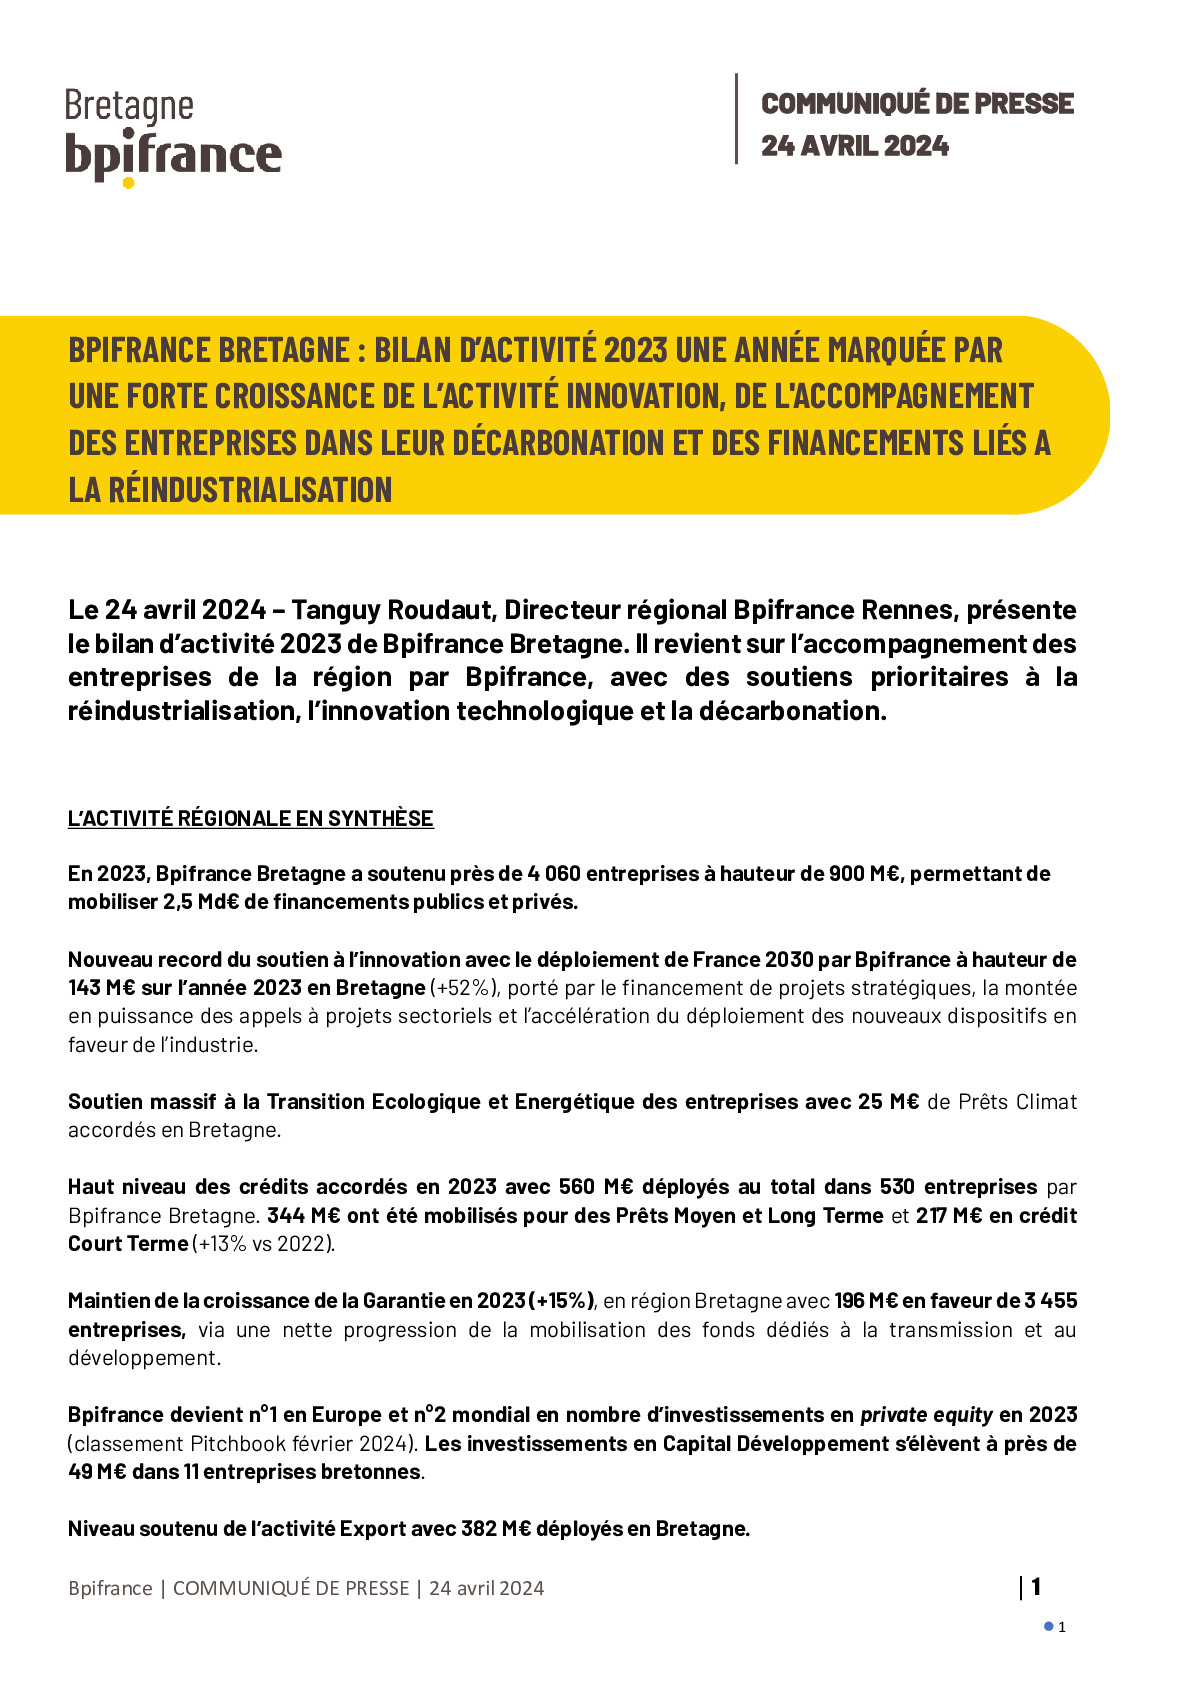 2024 04 24 – Bilan d’activité Bpifrance Bretagne 2023-pdf